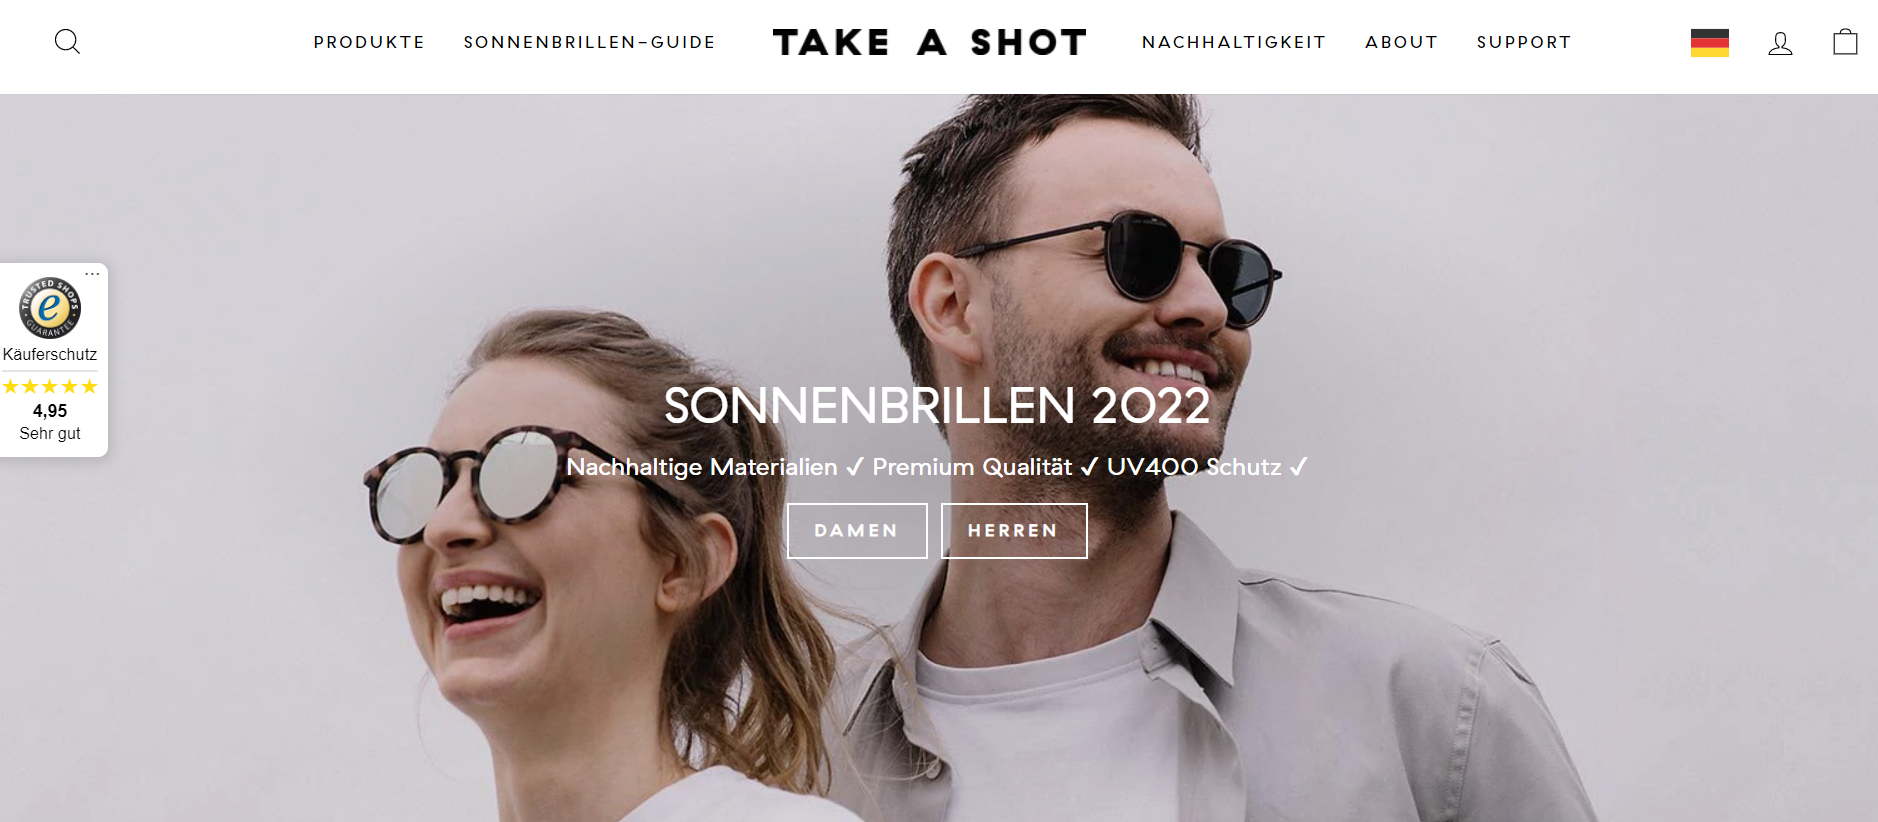 Die Website des Fashion E-Commerce TAKE A SHOT.